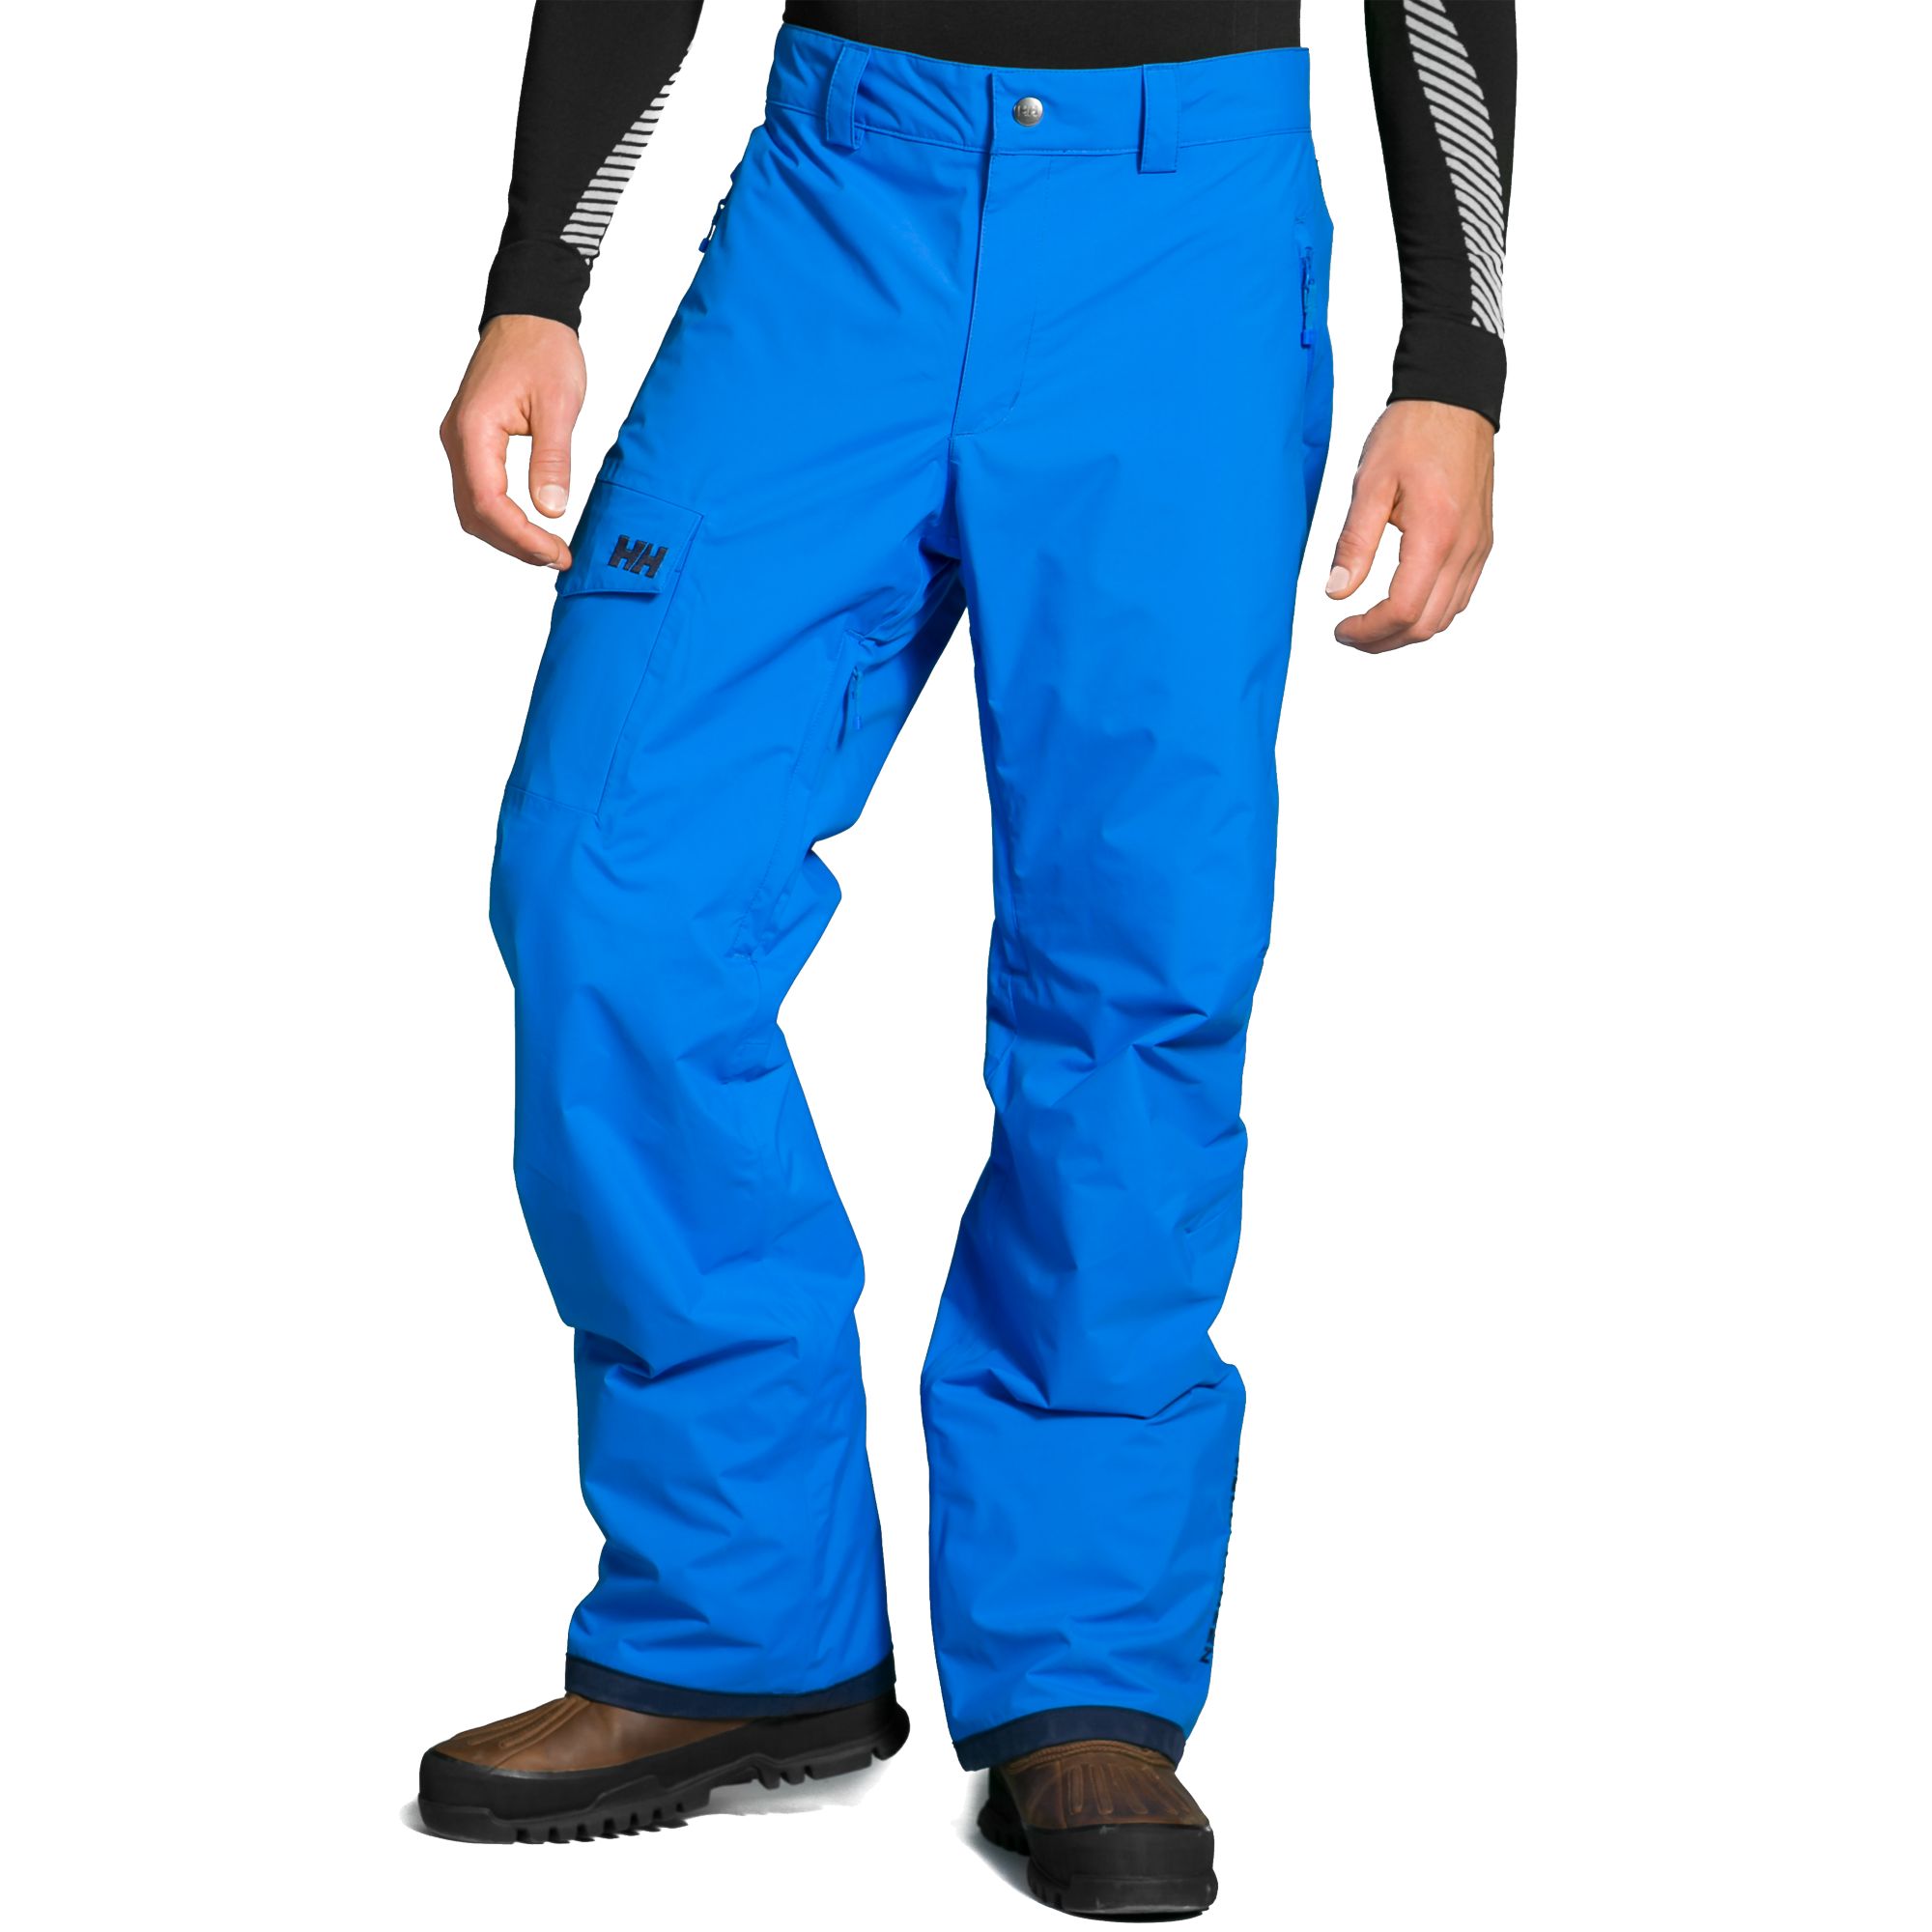 Helly Hansen Legend Cargo Ski Pants in Blue for Men - Lyst